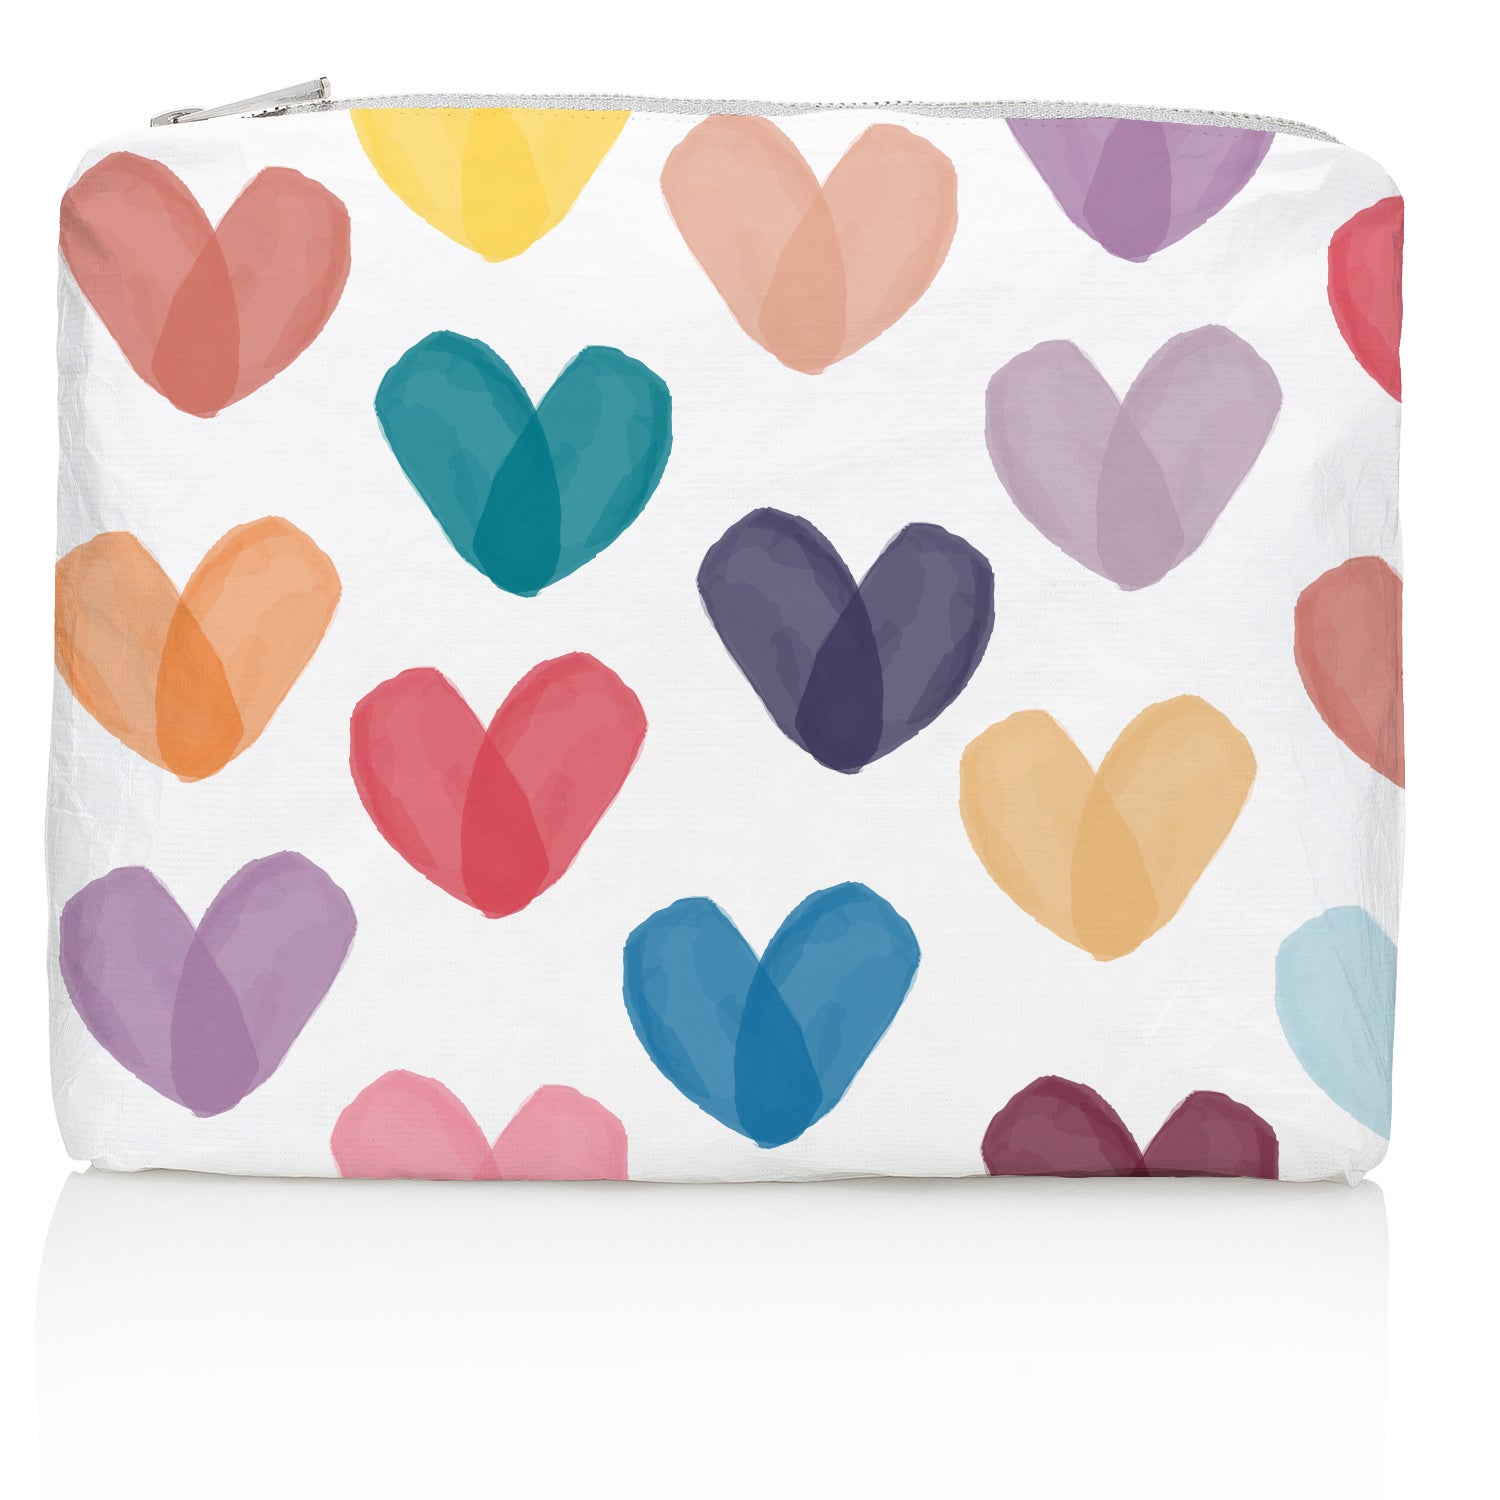 Medium zipper pack in "Language of Love" rainbow hearts pattern